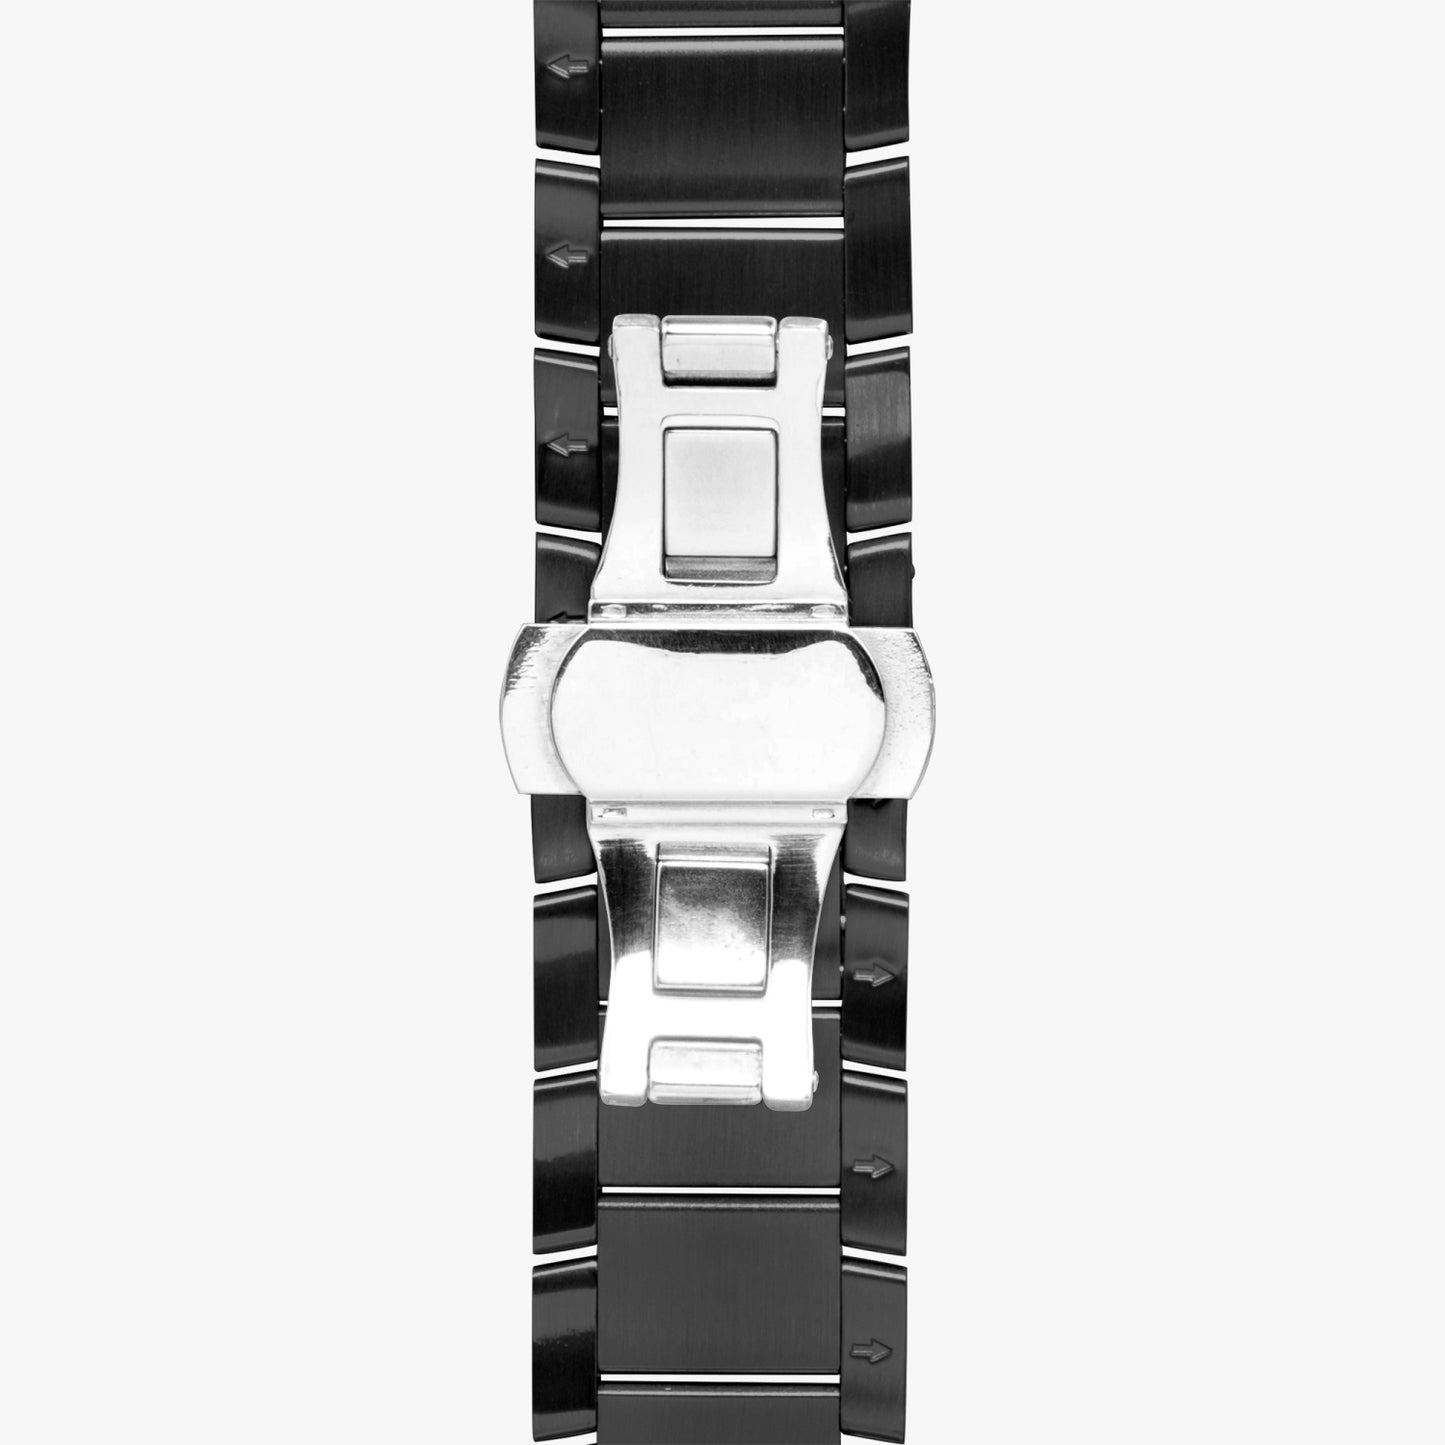 Automatic steel bracelet watch "Anivayan" (with indicators)